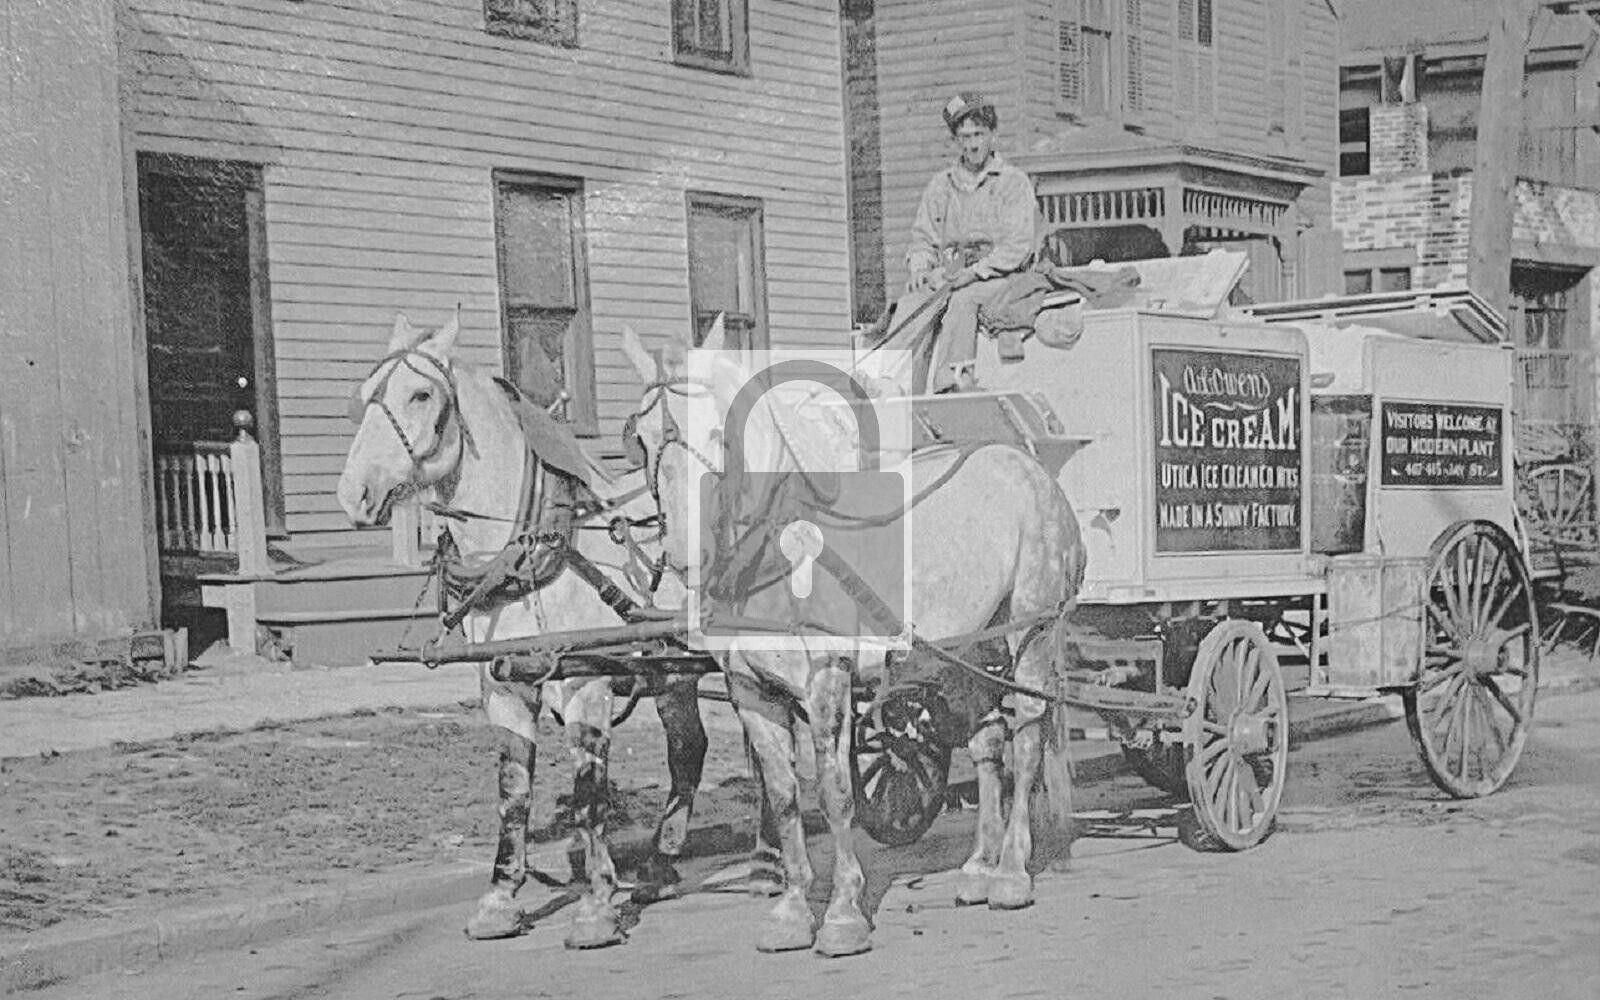 Ice Cream Horse Wagon Utica New York NY - 8x10 Reprint